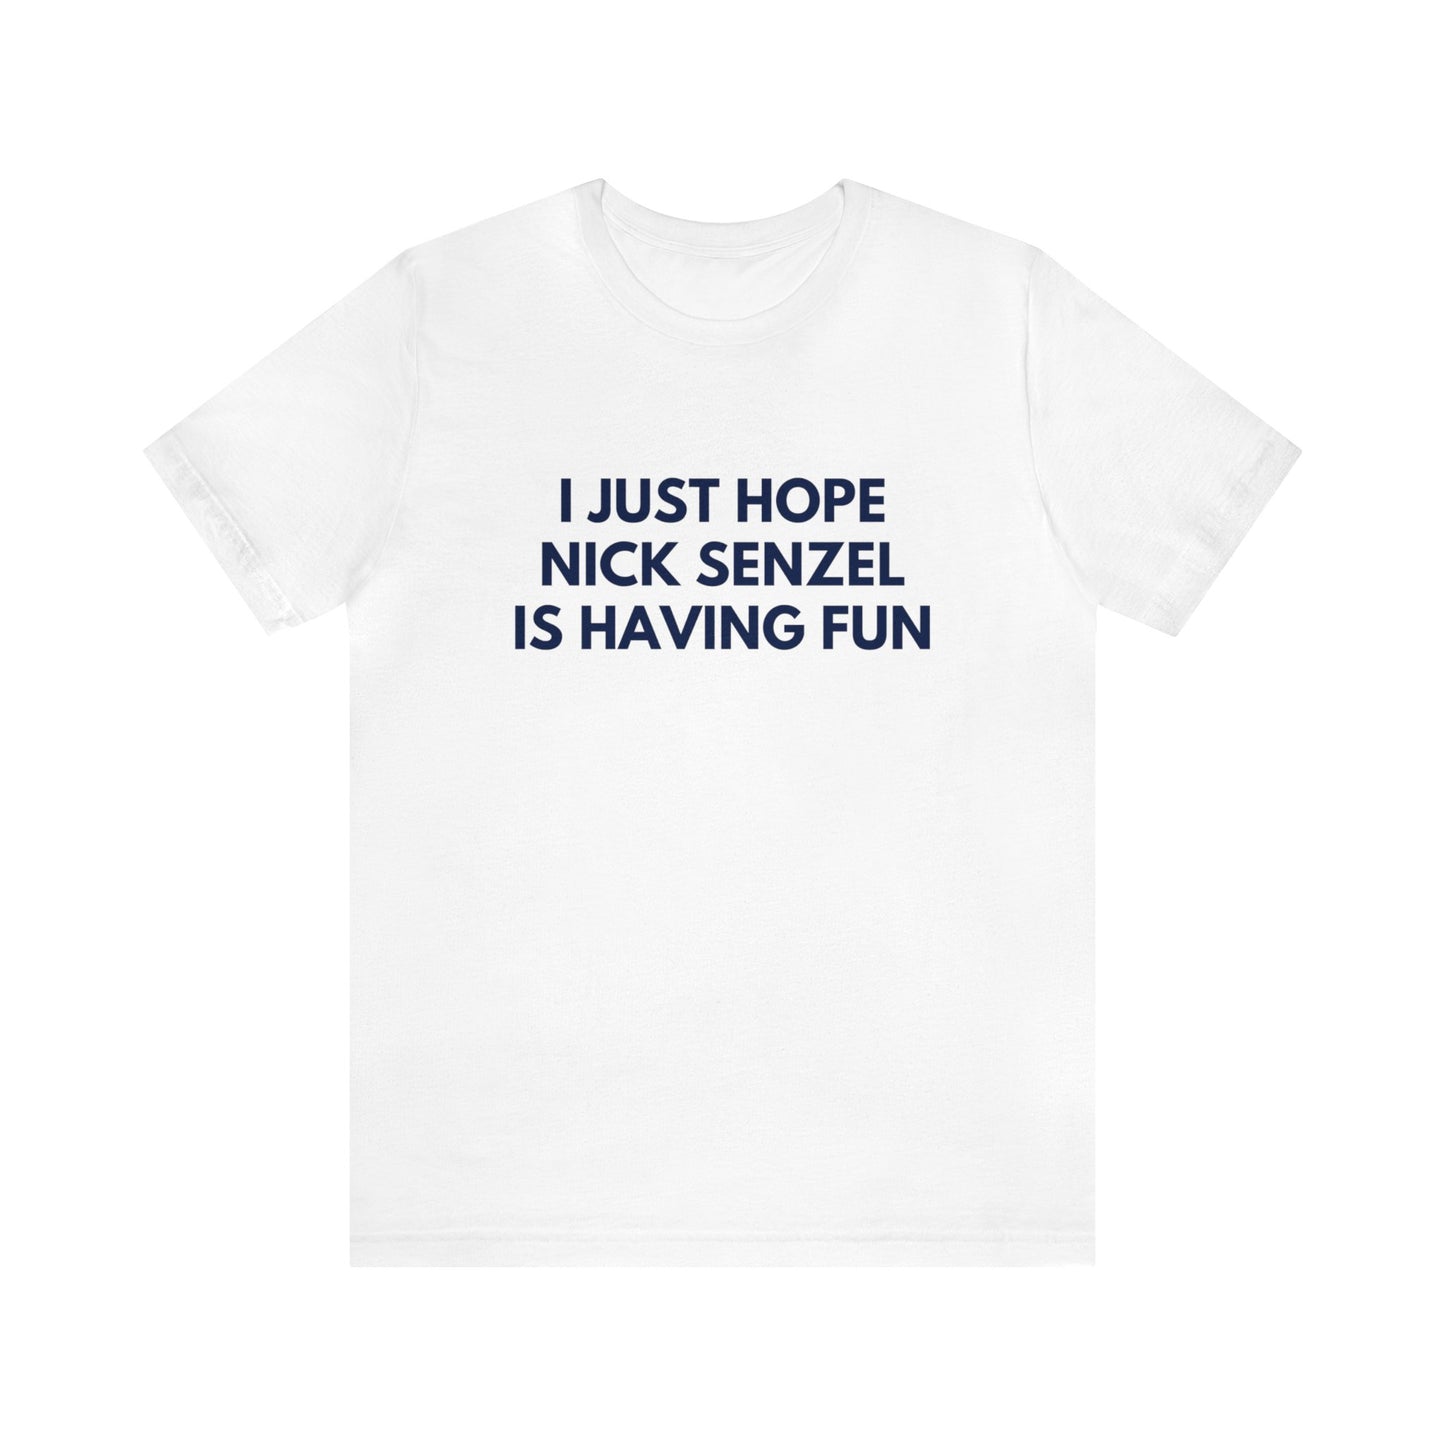 Nick Senzel Having Fun - Unisex T-shirt